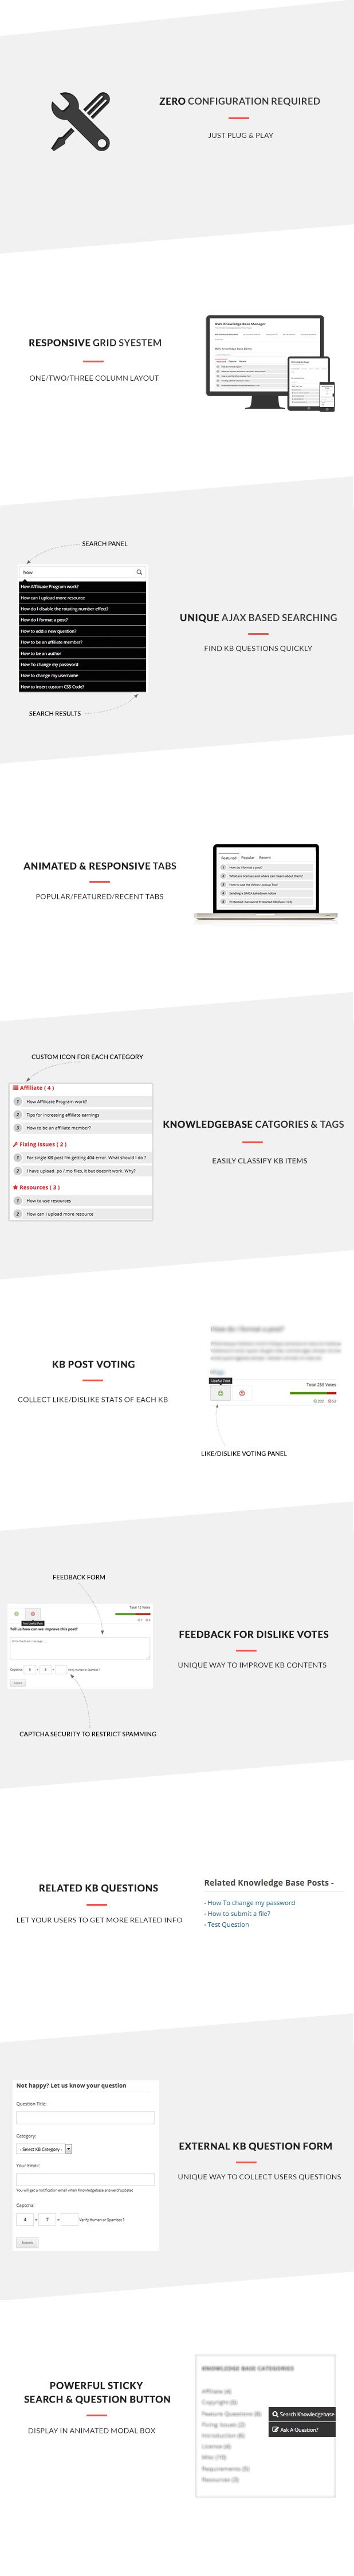 Knowledgedesk - Knowledge Base WordPress Theme - 9